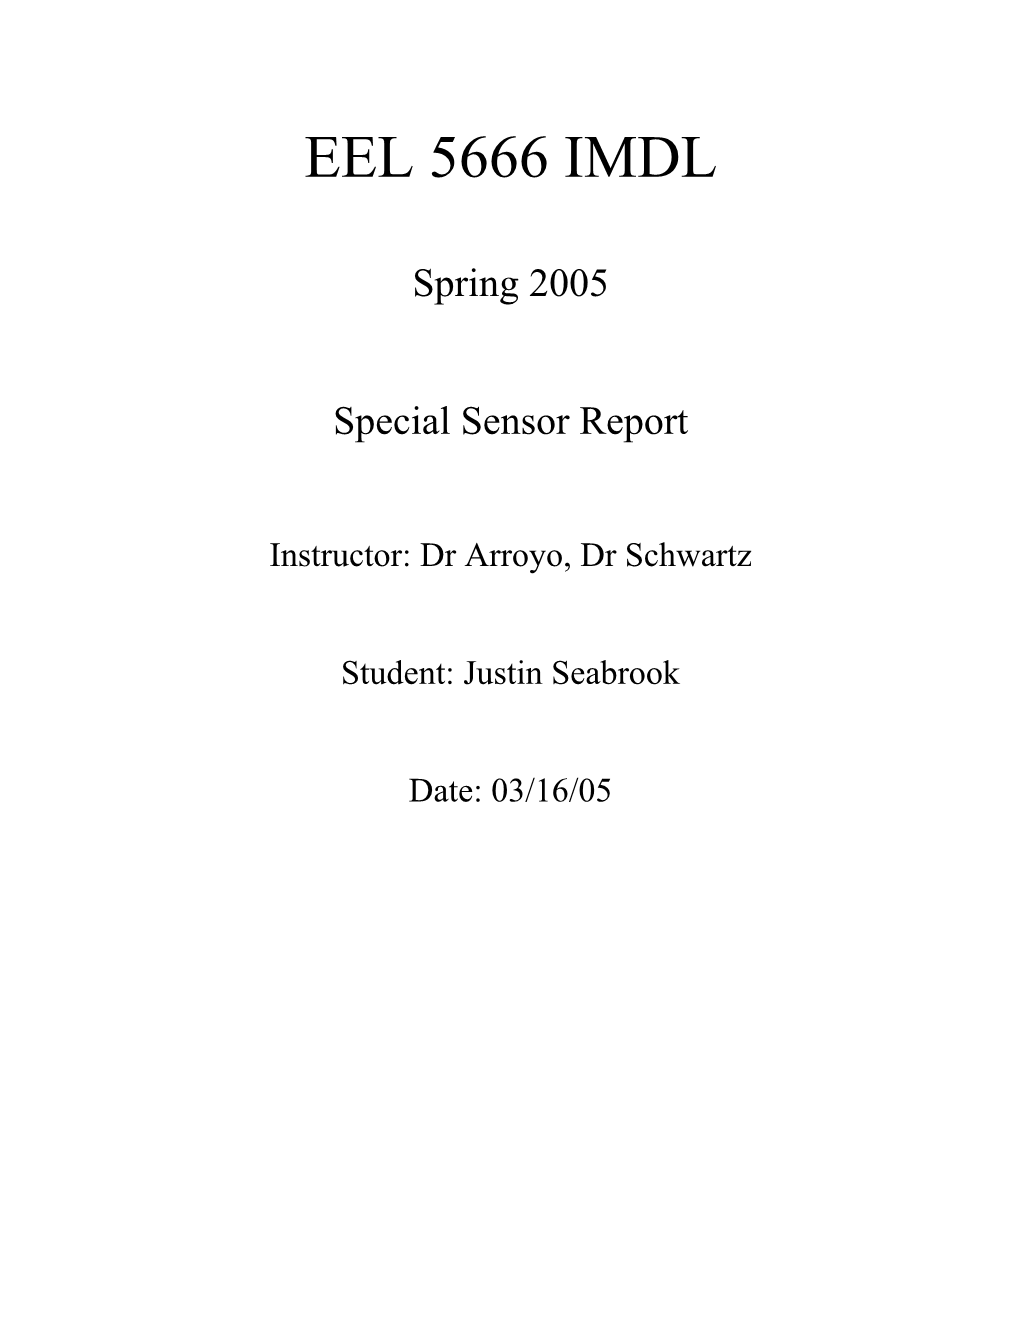 Special Sensor Report